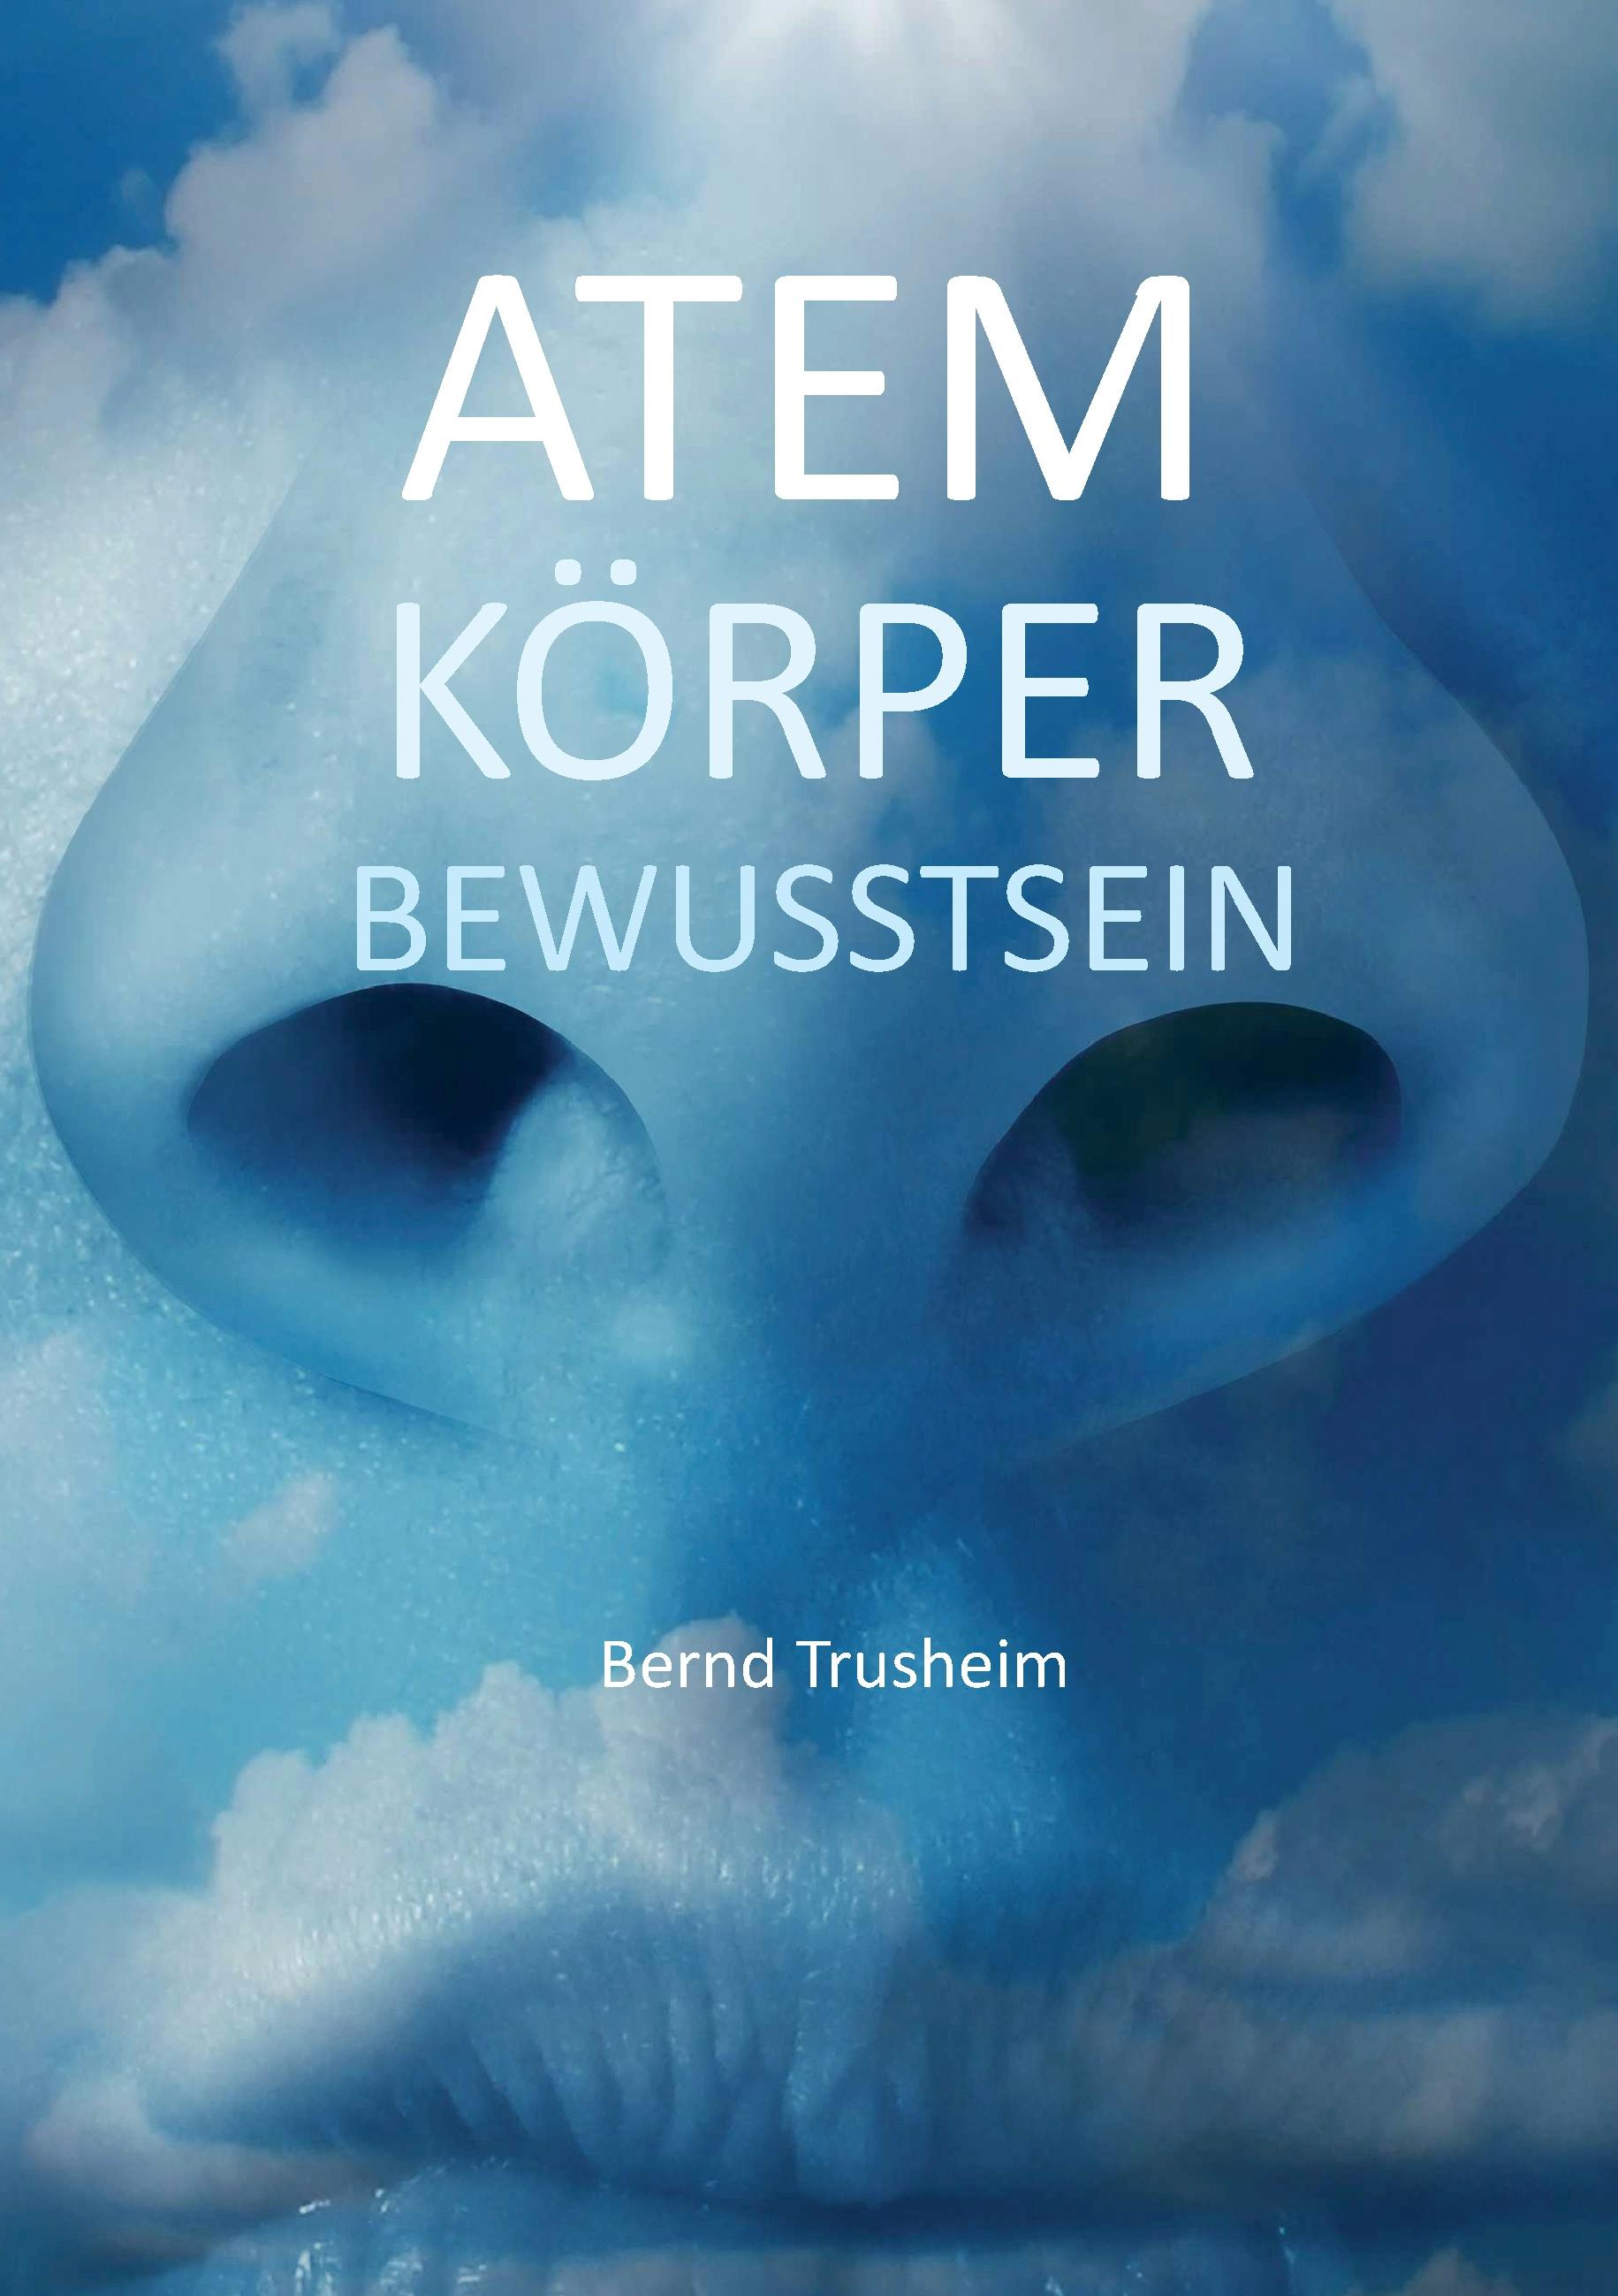 Atem Körper Bewusstsein - Bernd Trusheim